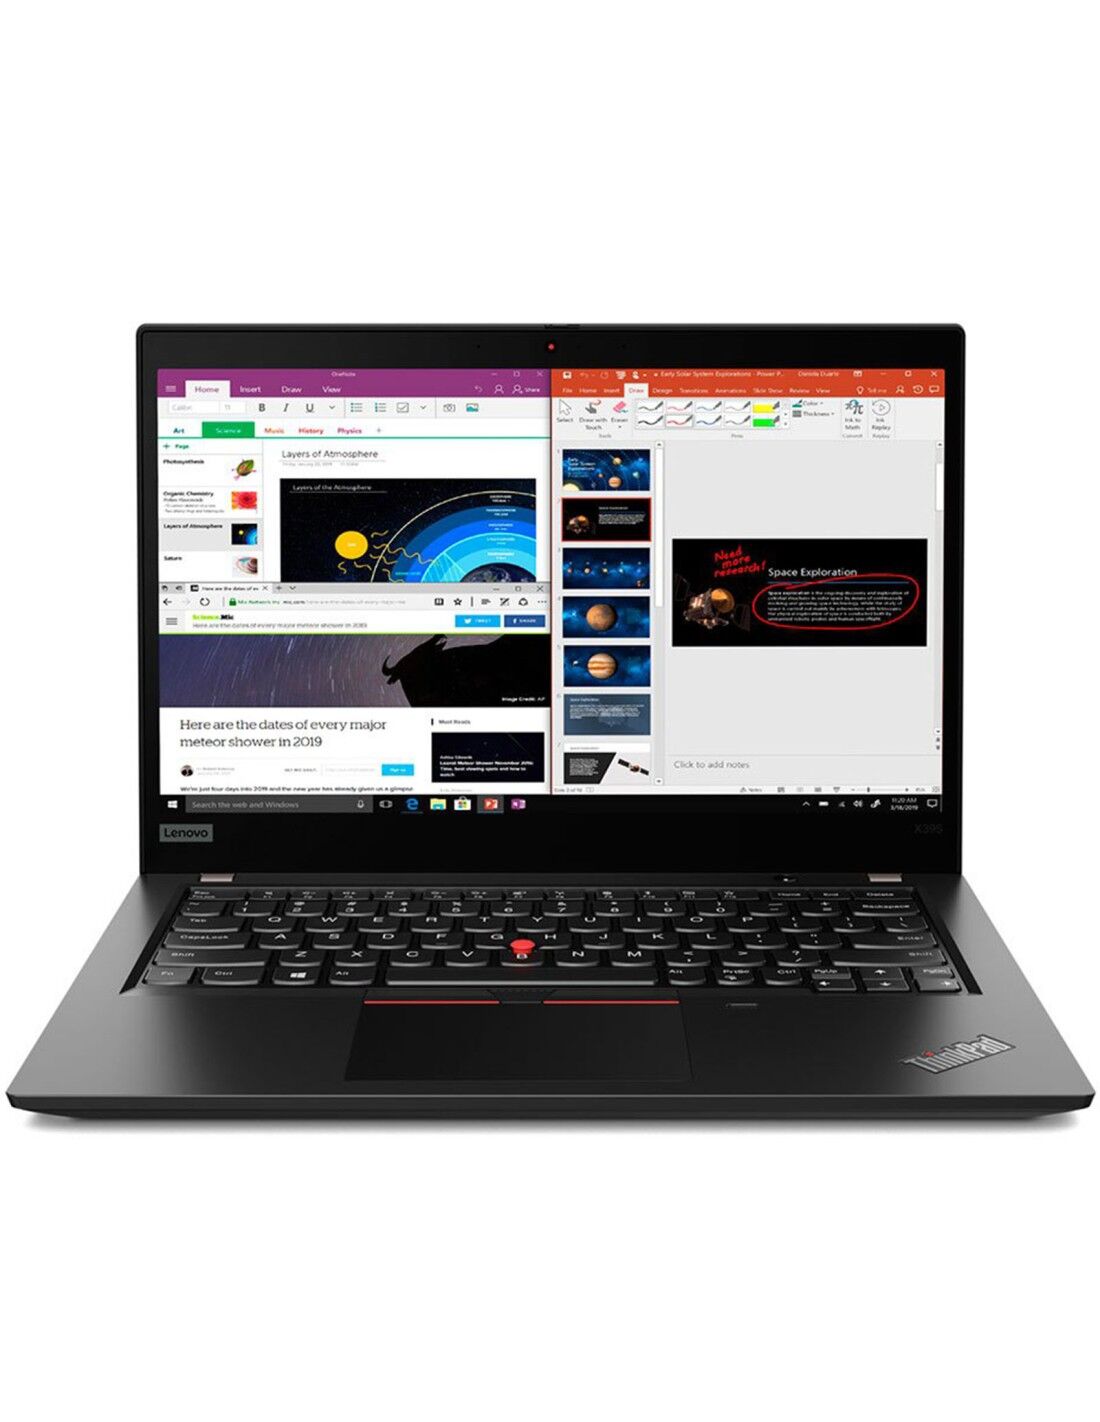 bLenovo ThinkPad X395 Notebook 13.3" Touchscreen AMD Ryzen 5 3500U Ram 16GB SSD 256GB Webcam (Ricondizionato Grado A)